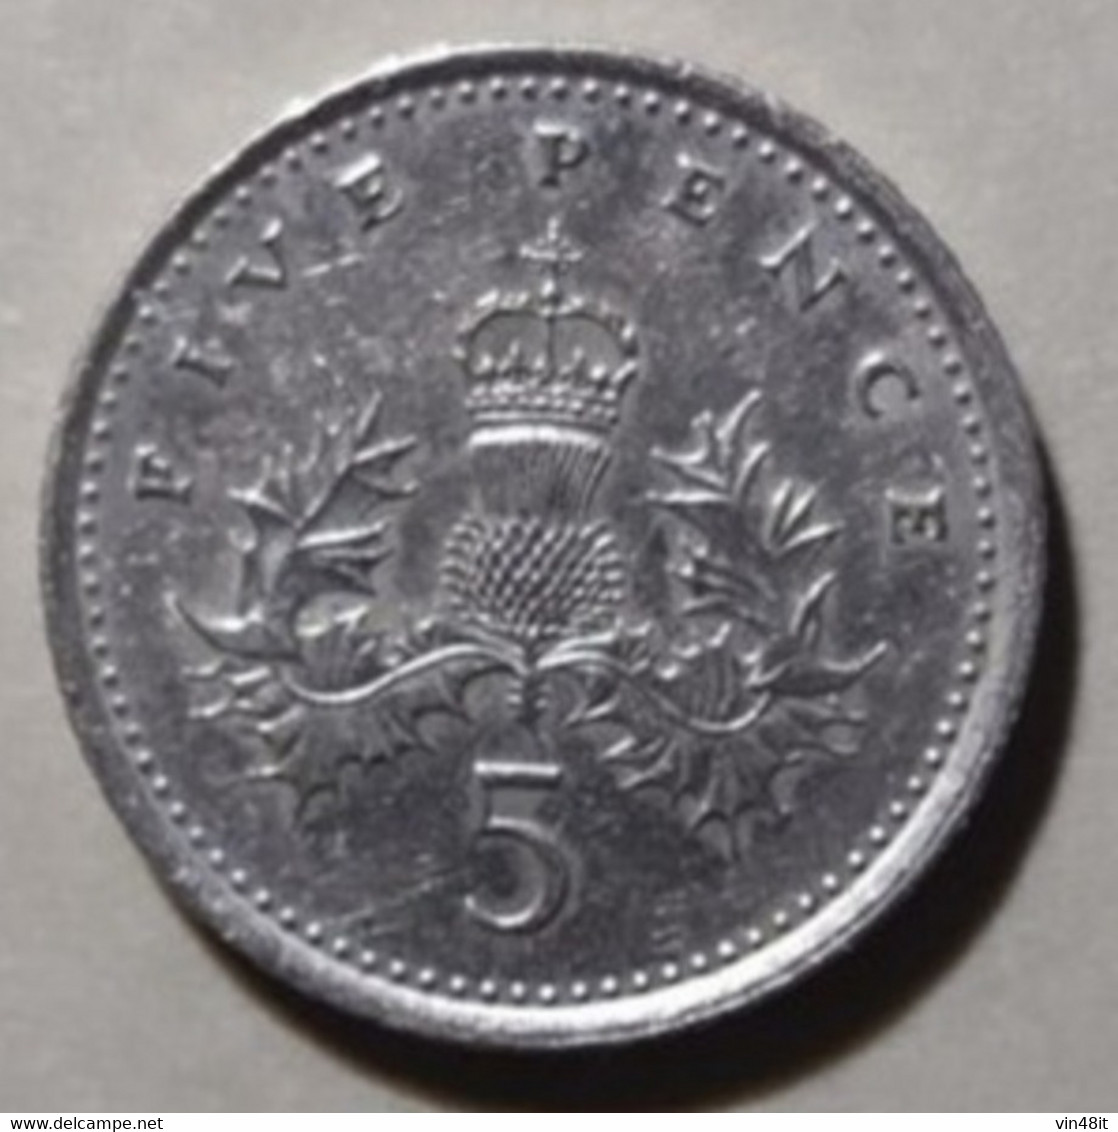 1992  - GRAN BRETAGNA - MONETA DEL VALORE DI 5 PENCE -  USATA - 5 Pence & 5 New Pence